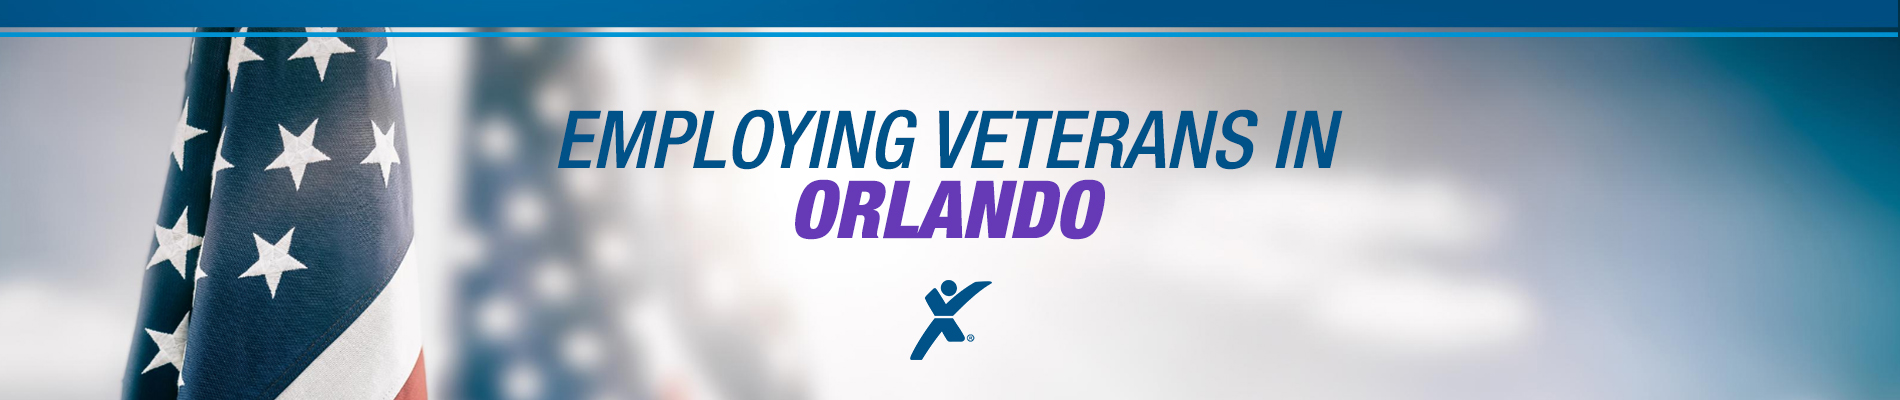 Employing veterans in Orlando, Florida - Express Pros